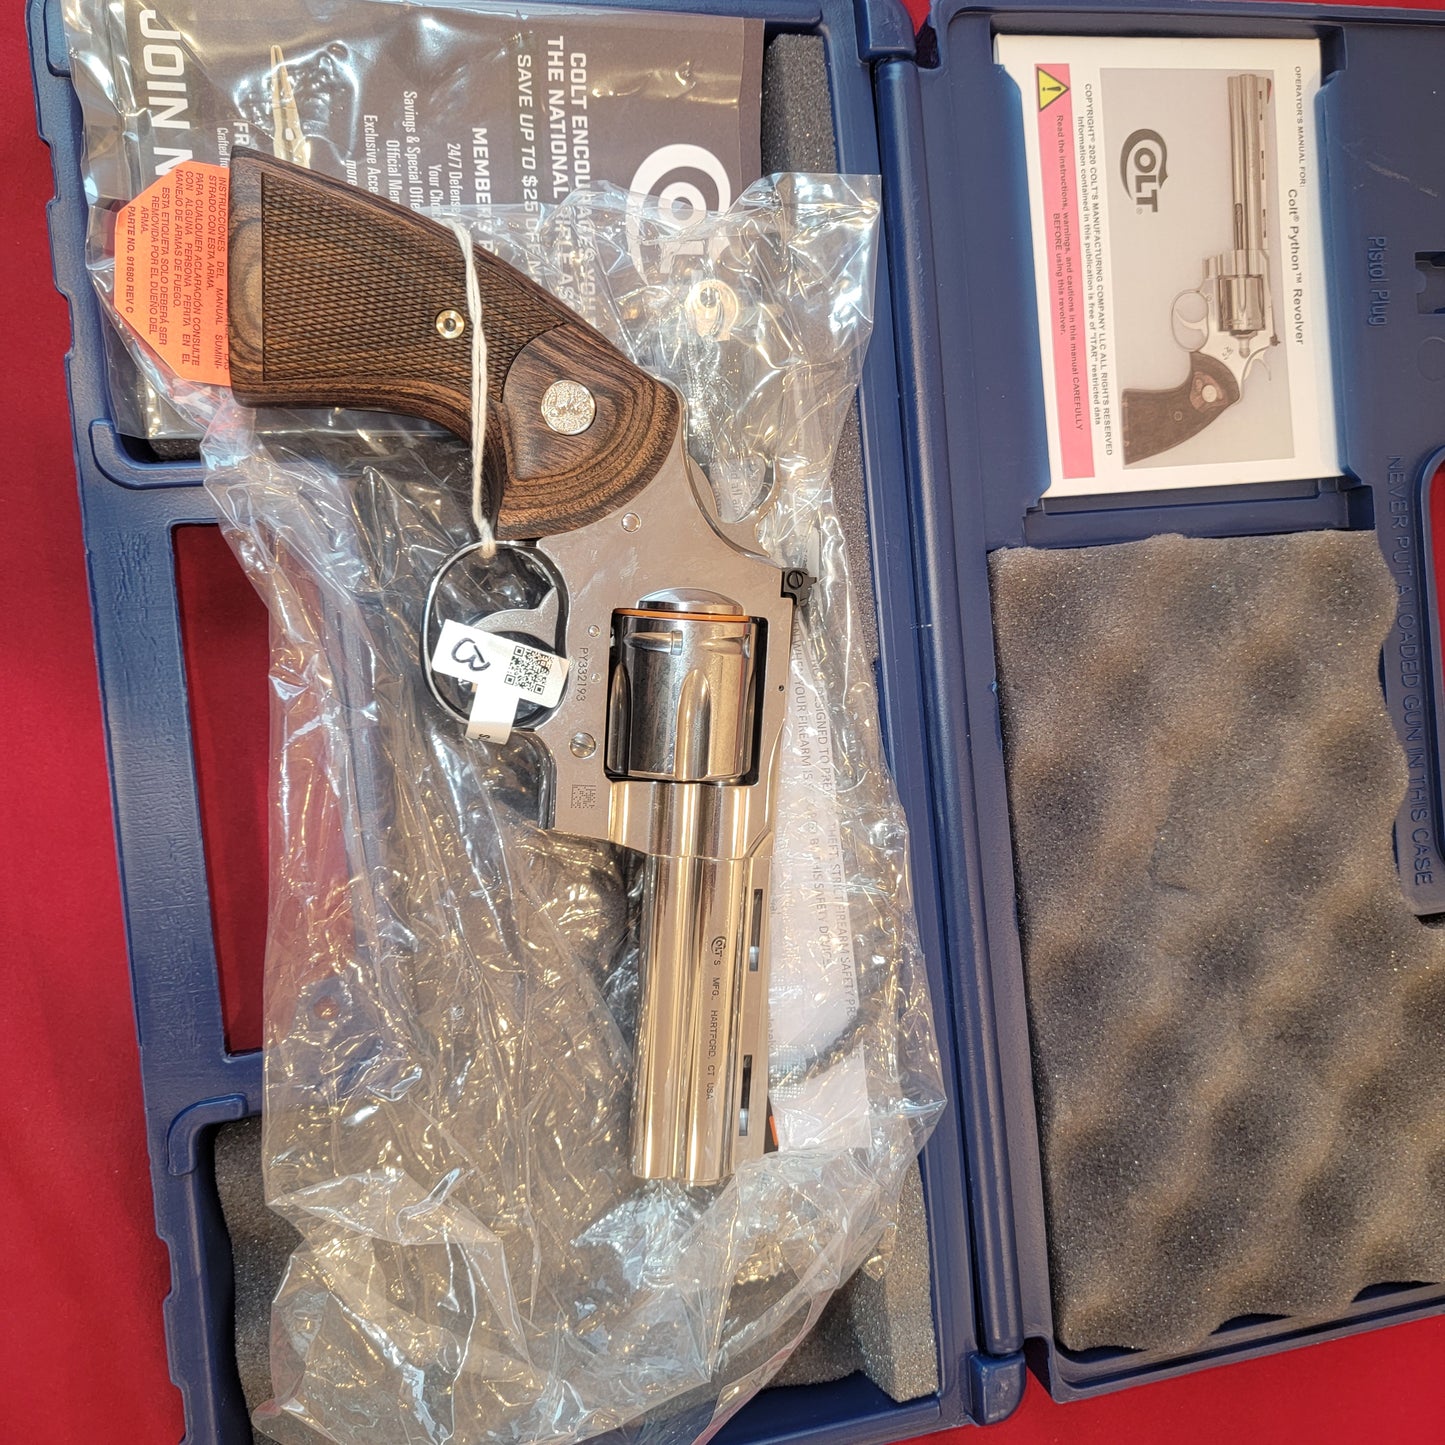 Colt Python 357 Magnum 4.25" inch Revolver 6 shot